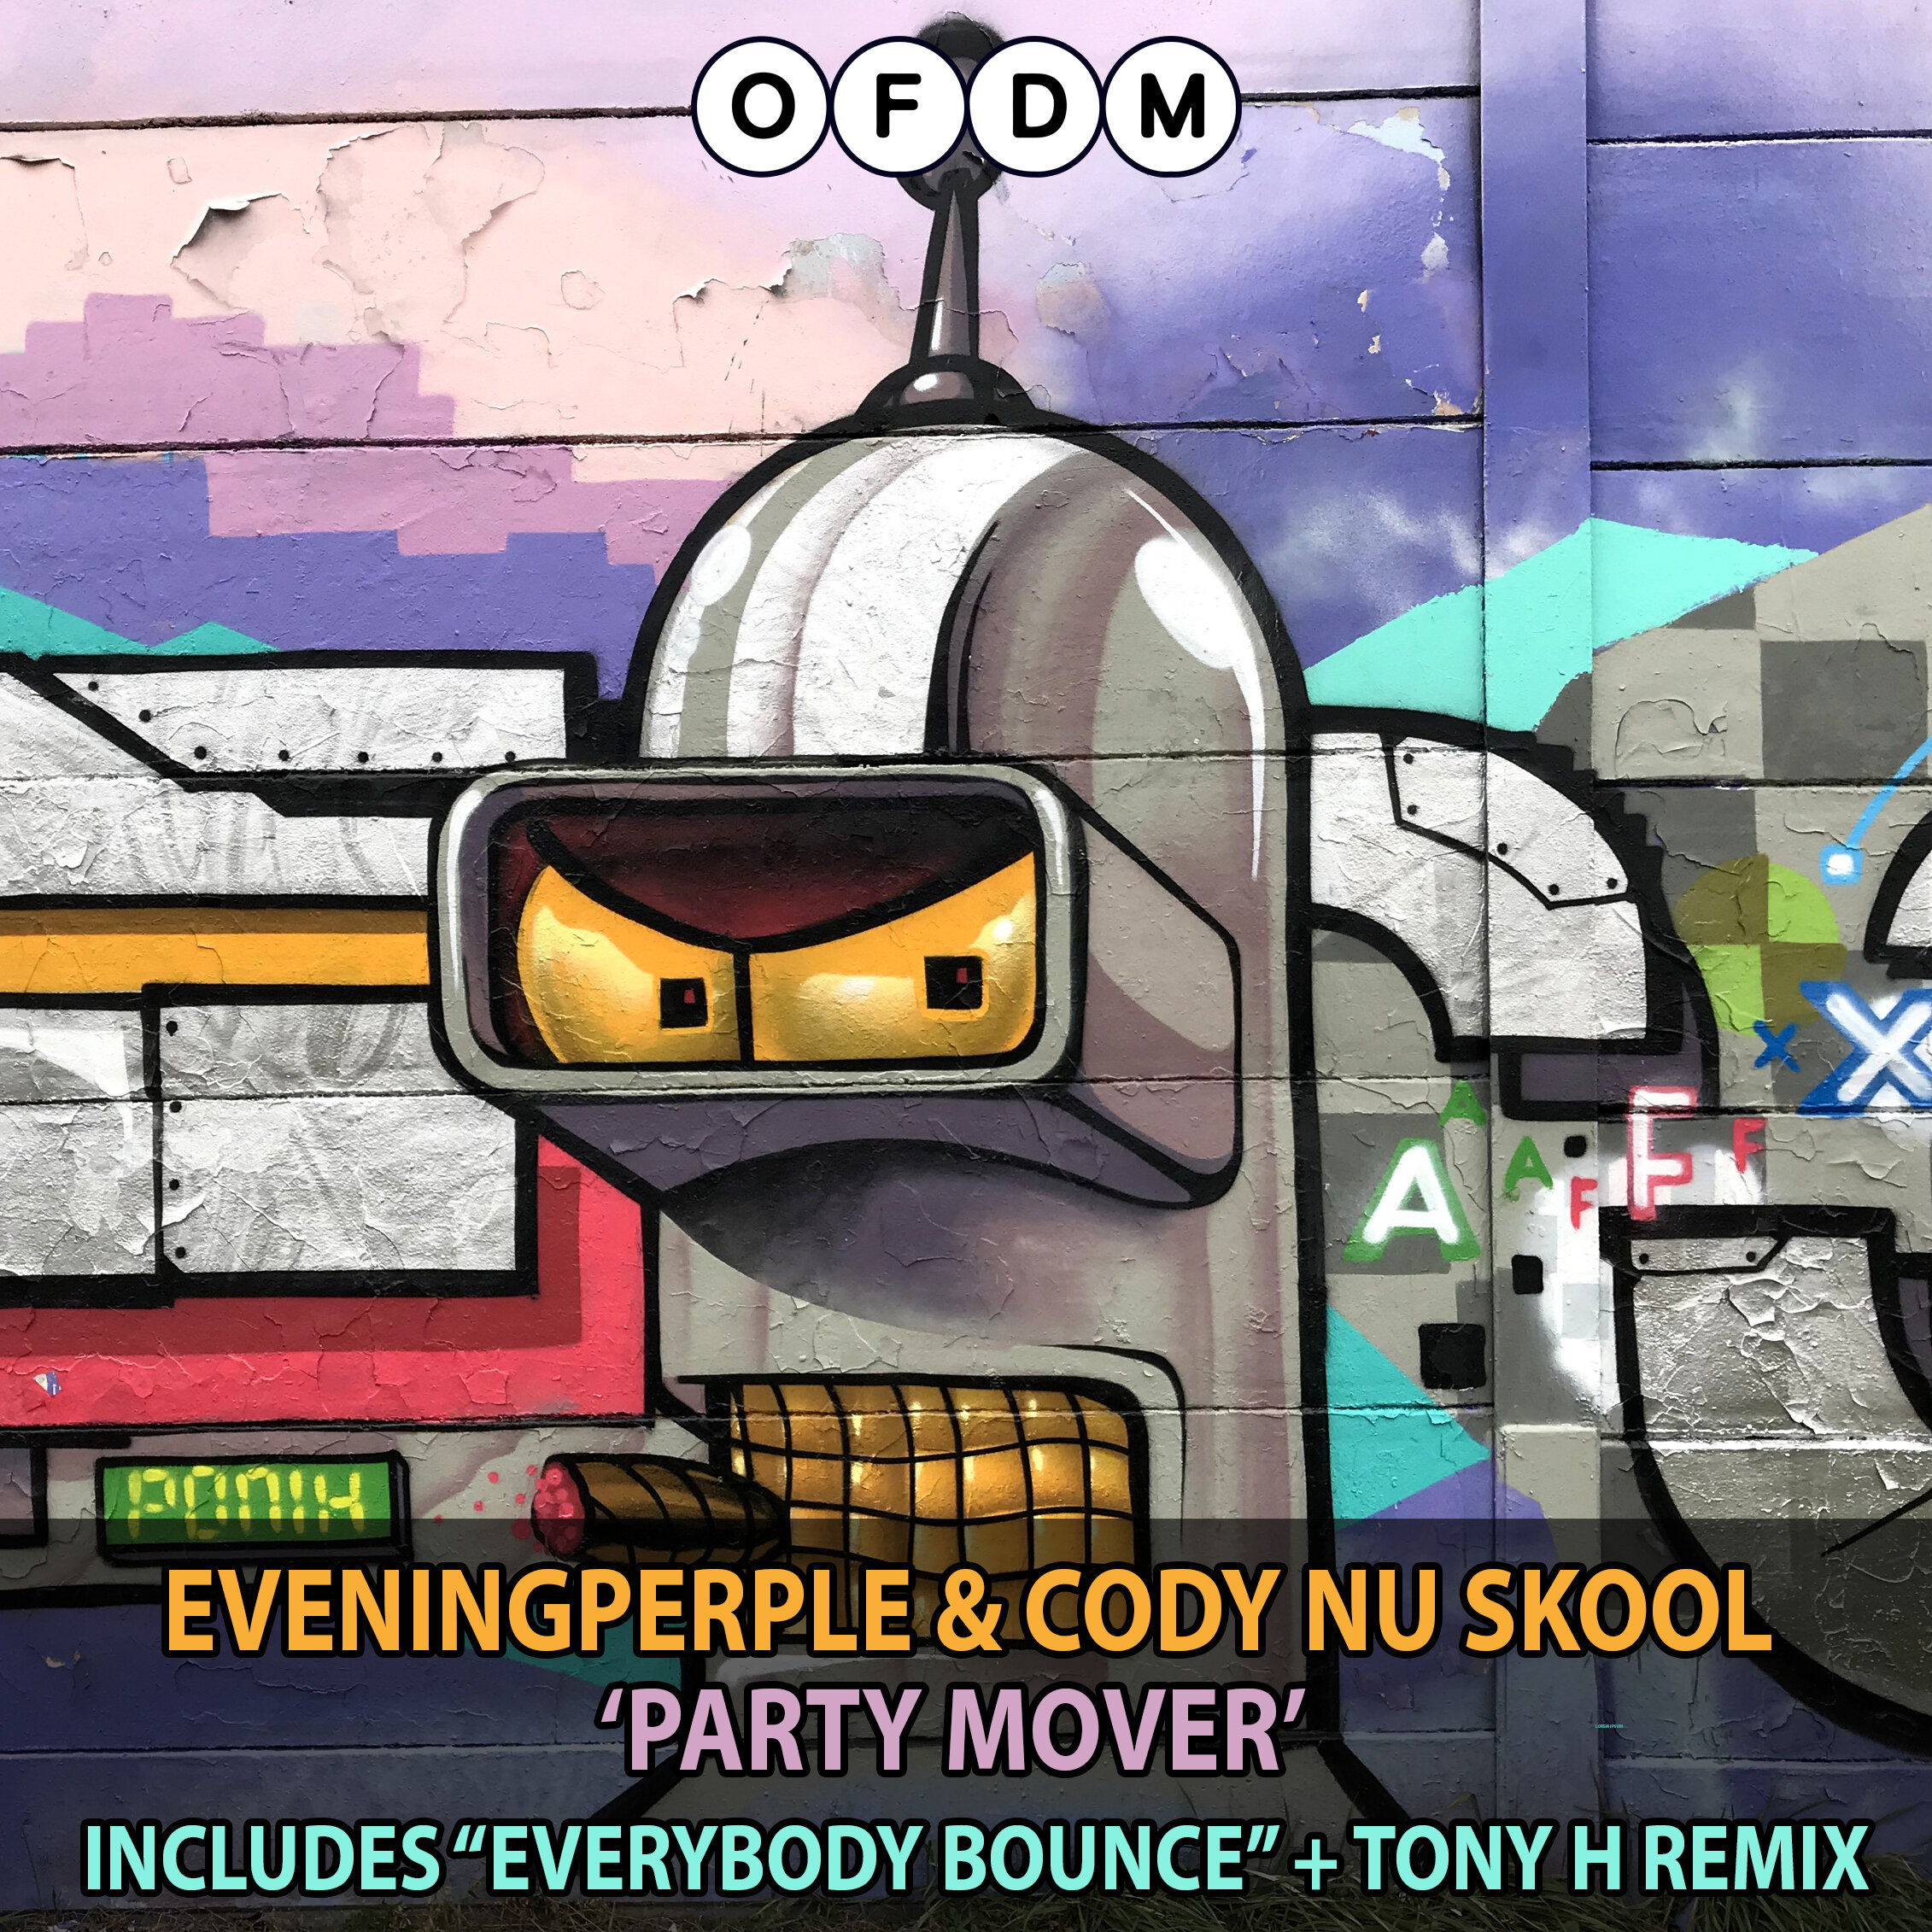 [OFDM091] Eveningperple & Cody Nu Skool - Party Mover EP (ARTWORK).jpg